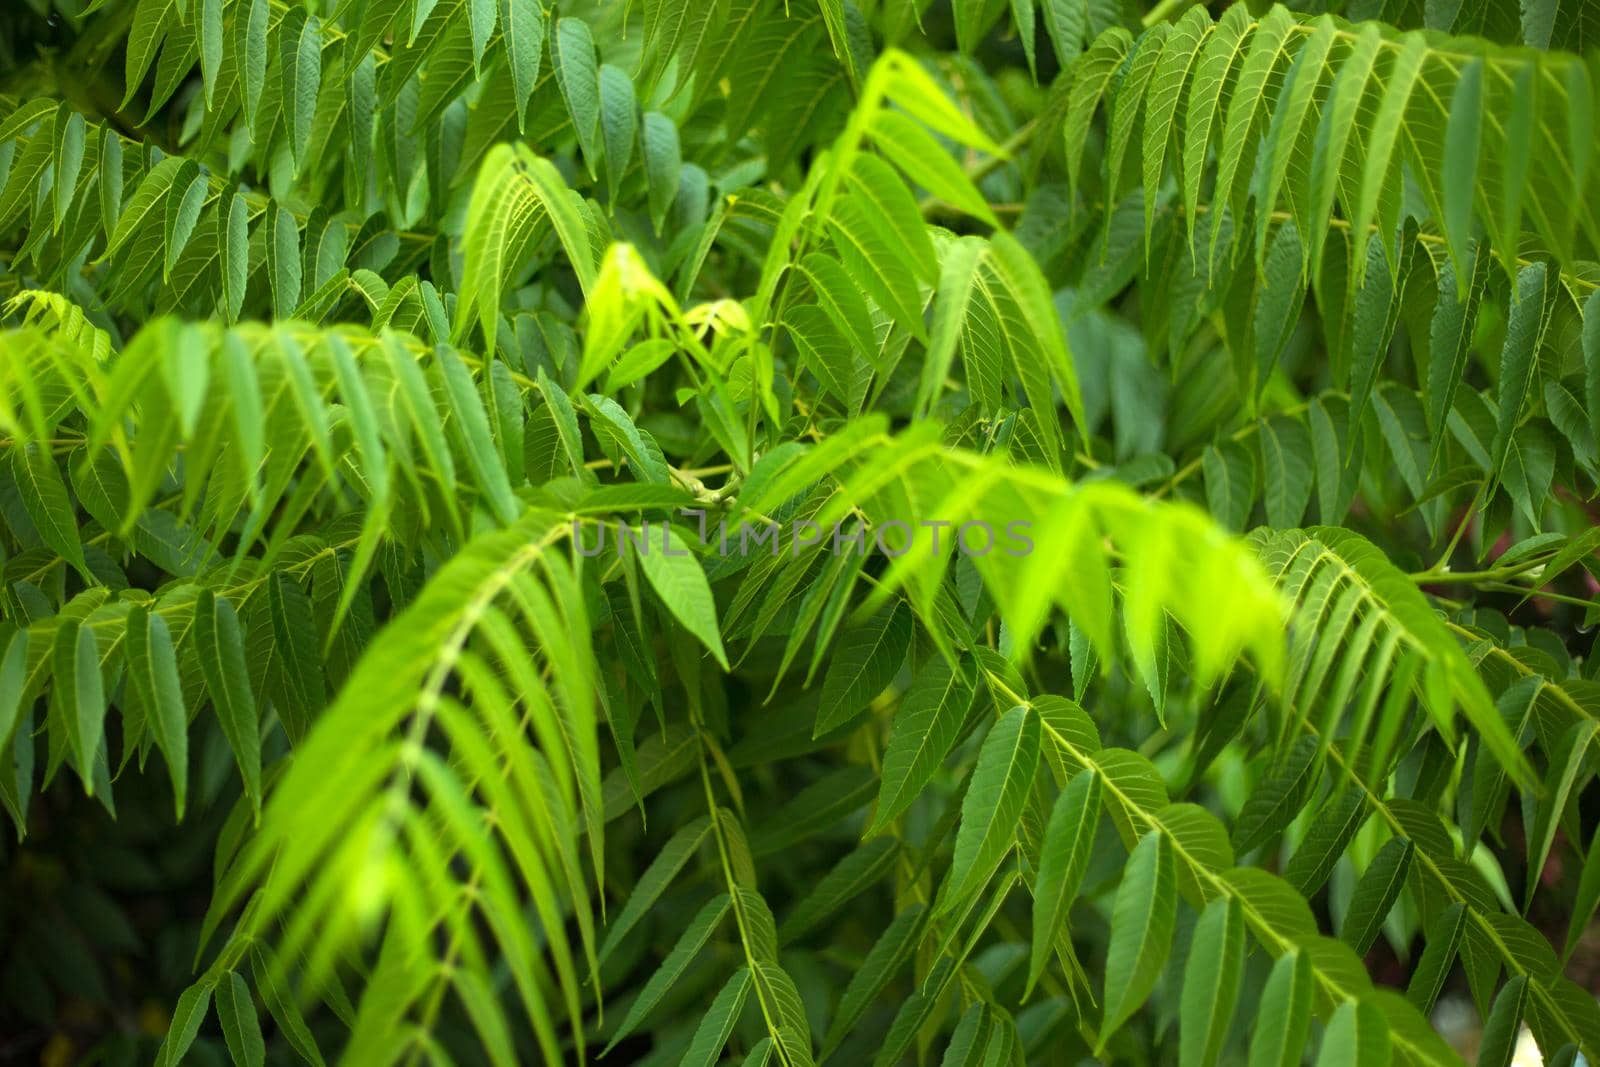 Tropical green leaves fresh blur background